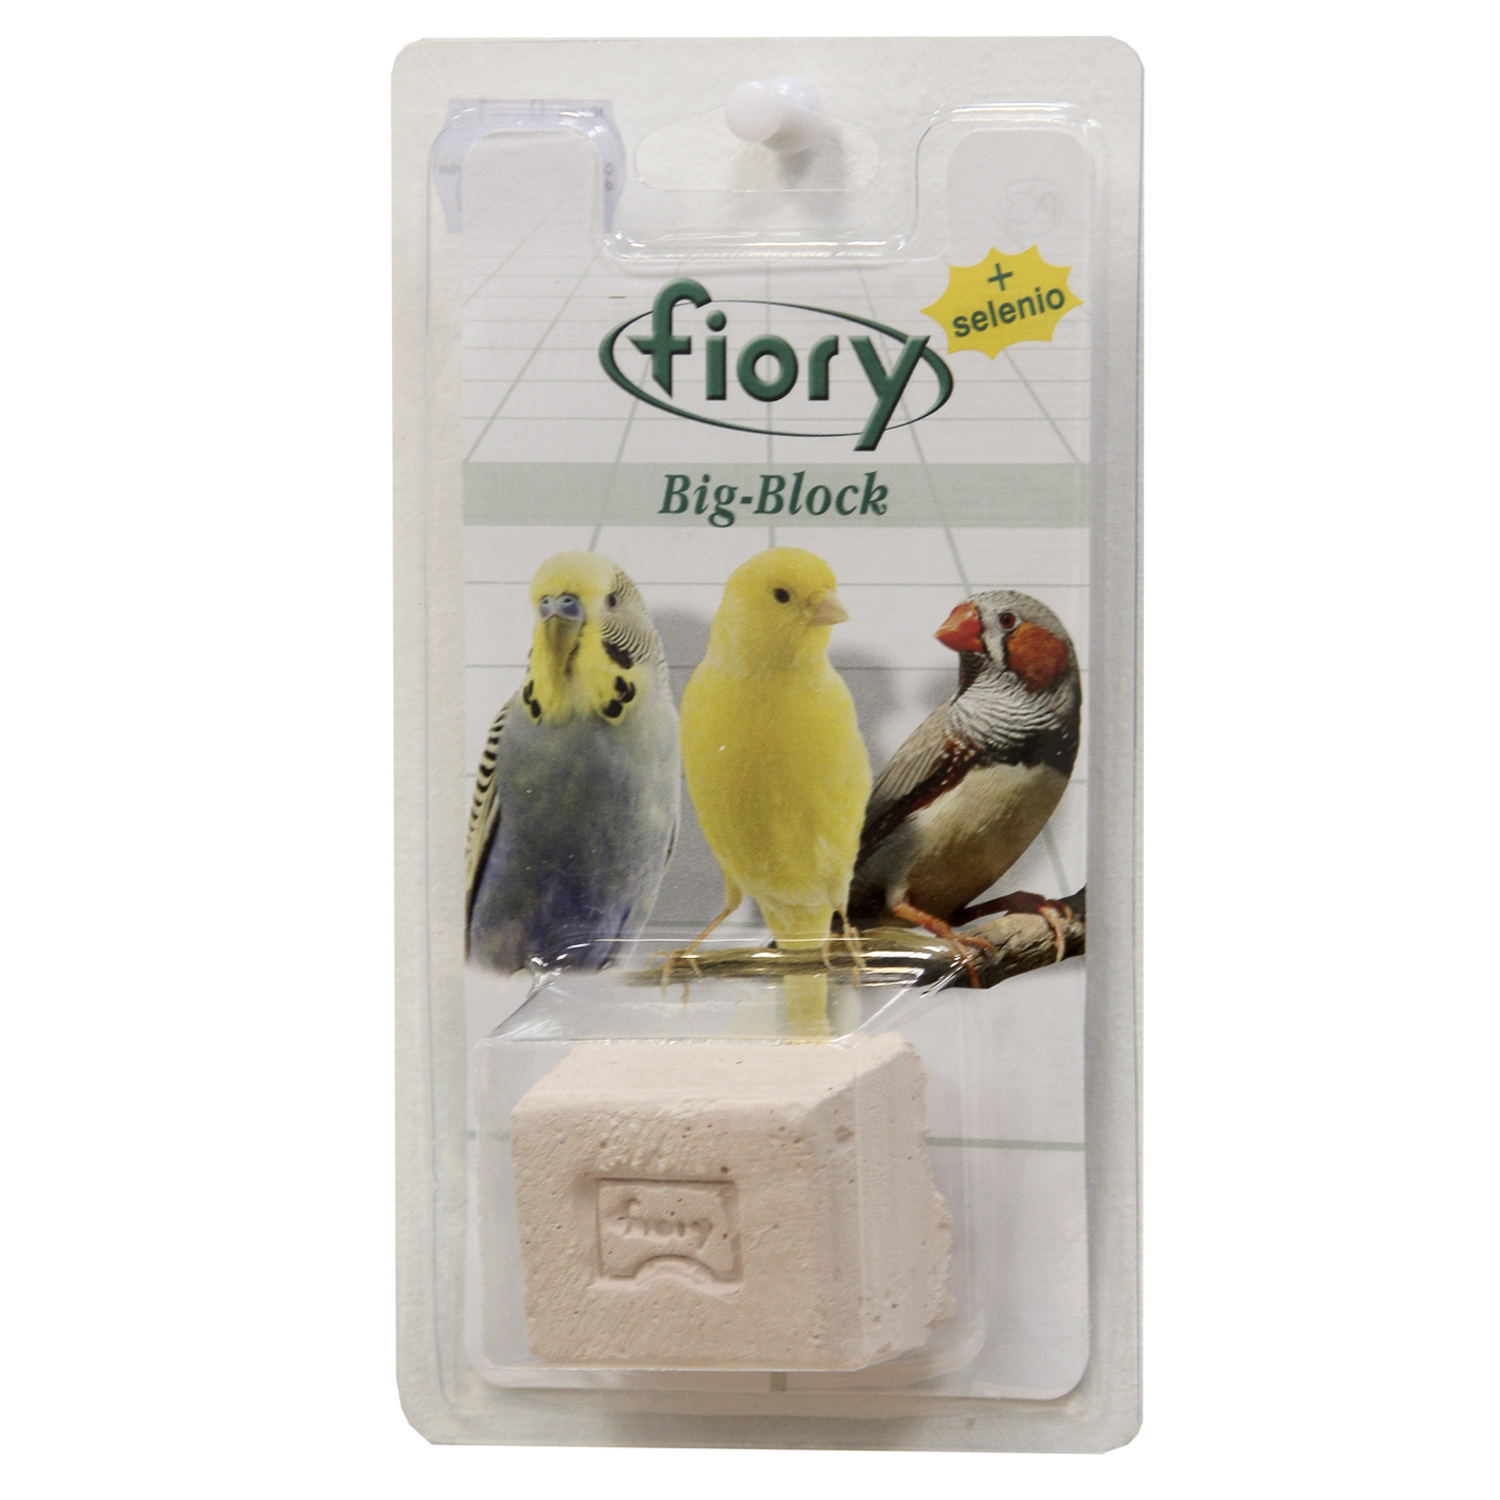 Fiory Fiory био-камень для птиц, с селеном (55 г)